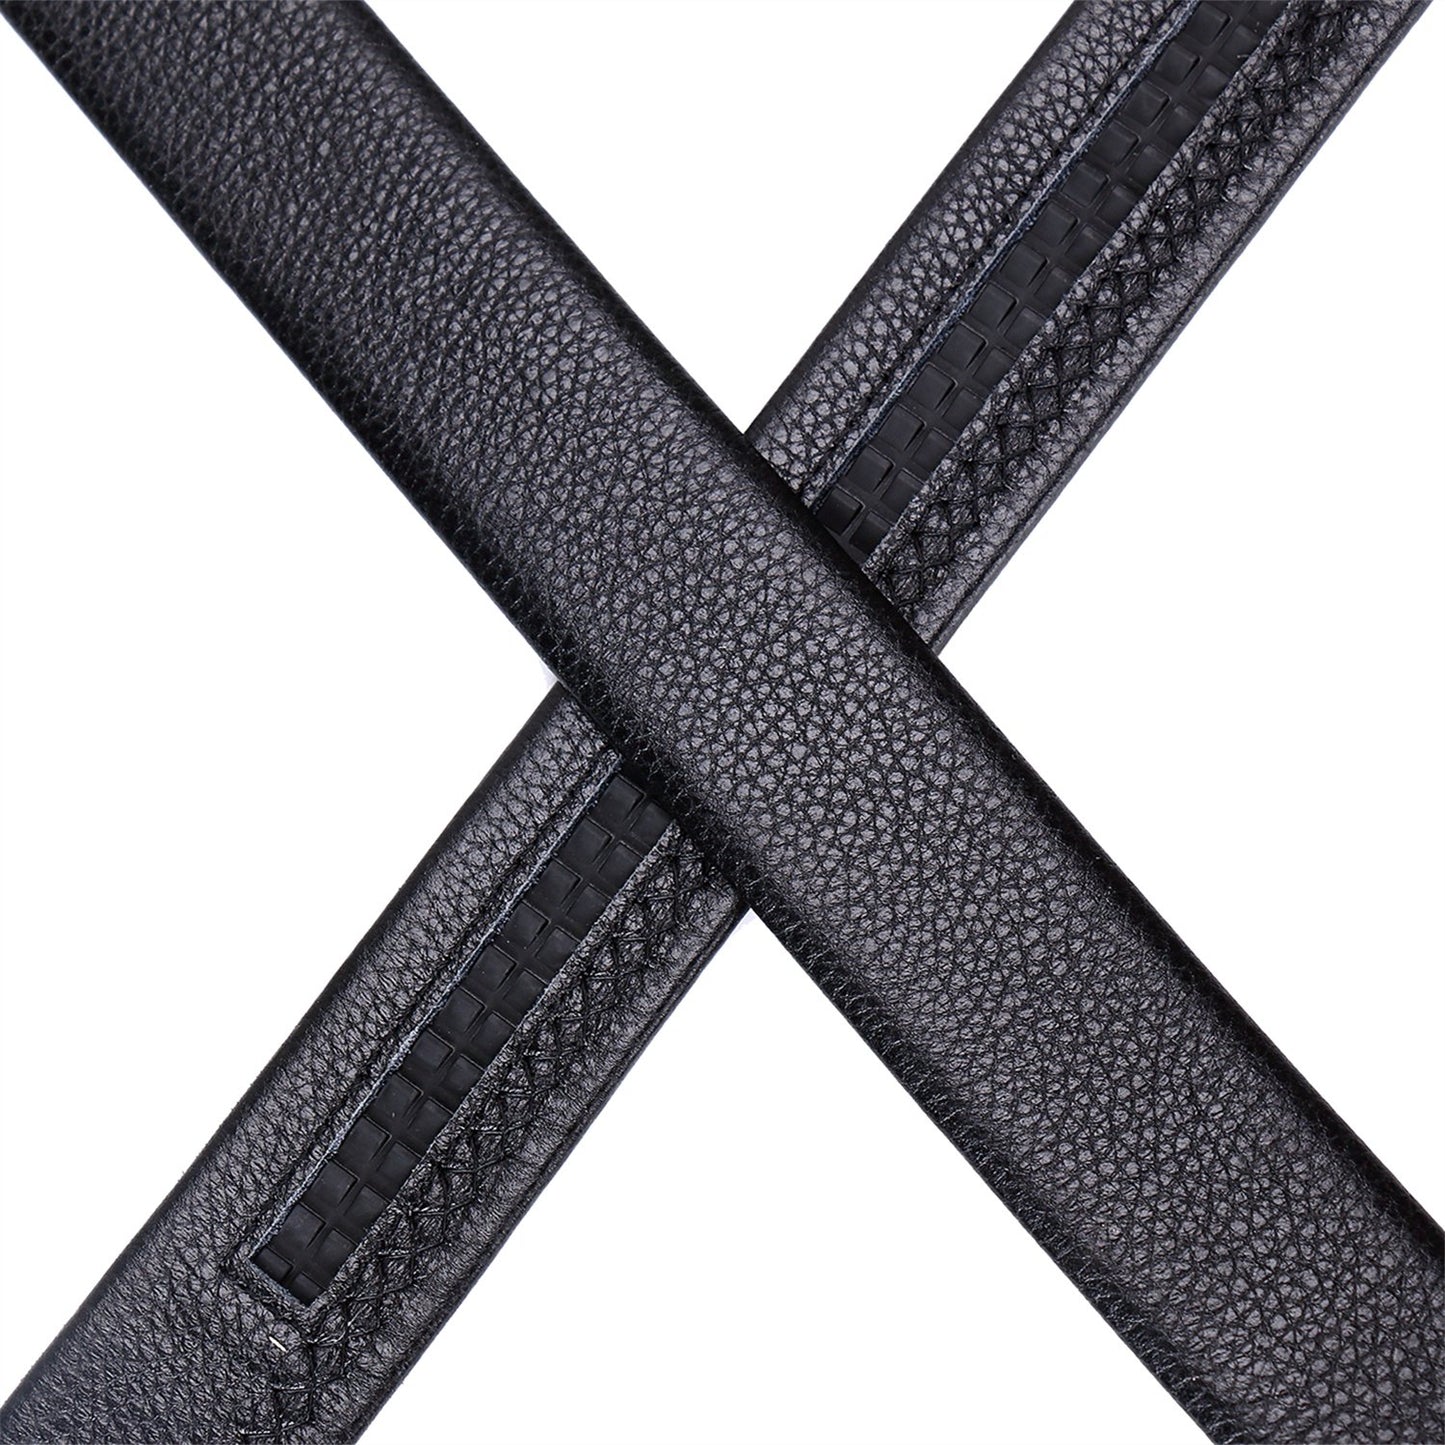 Men’s Leather Ratchet Belt Comfort Dress Belt for Men with Automatic Buckle - Beltbuy Store